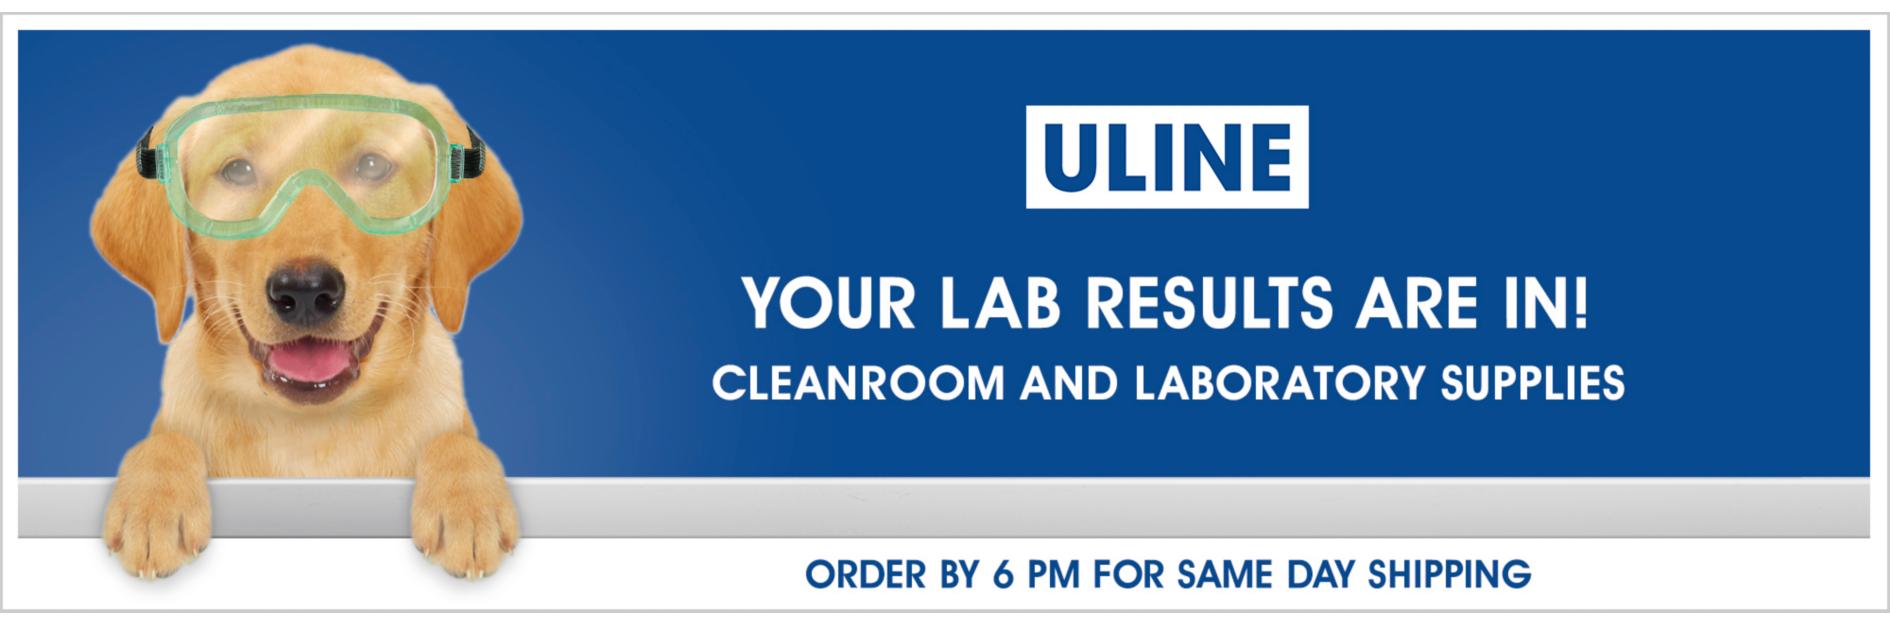 Uline: Lab Room Supplies